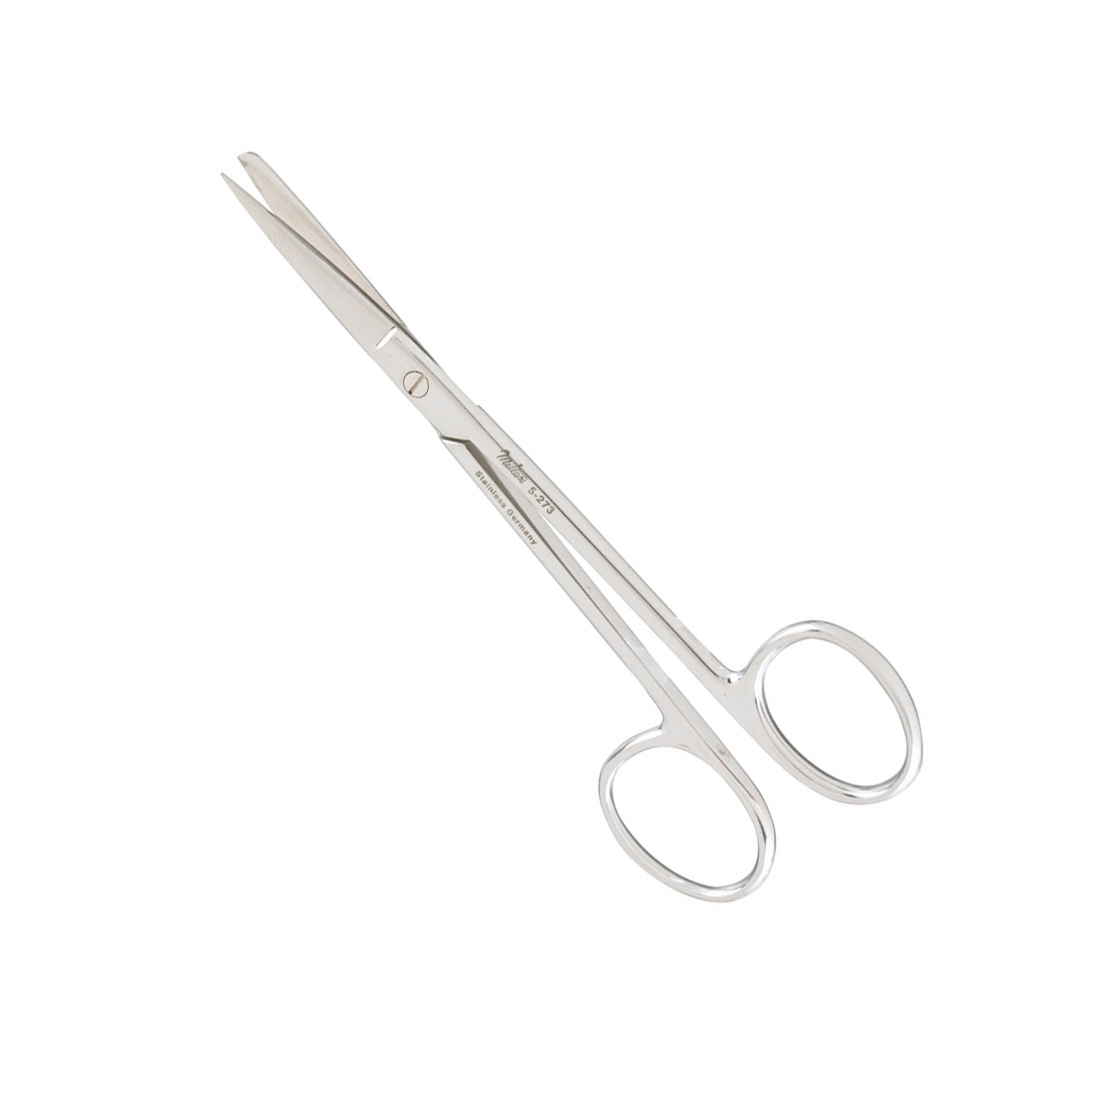 Wagner Plastic Surgery Scissors, Straight, Sharp-Blunt Points, Serrated Blade